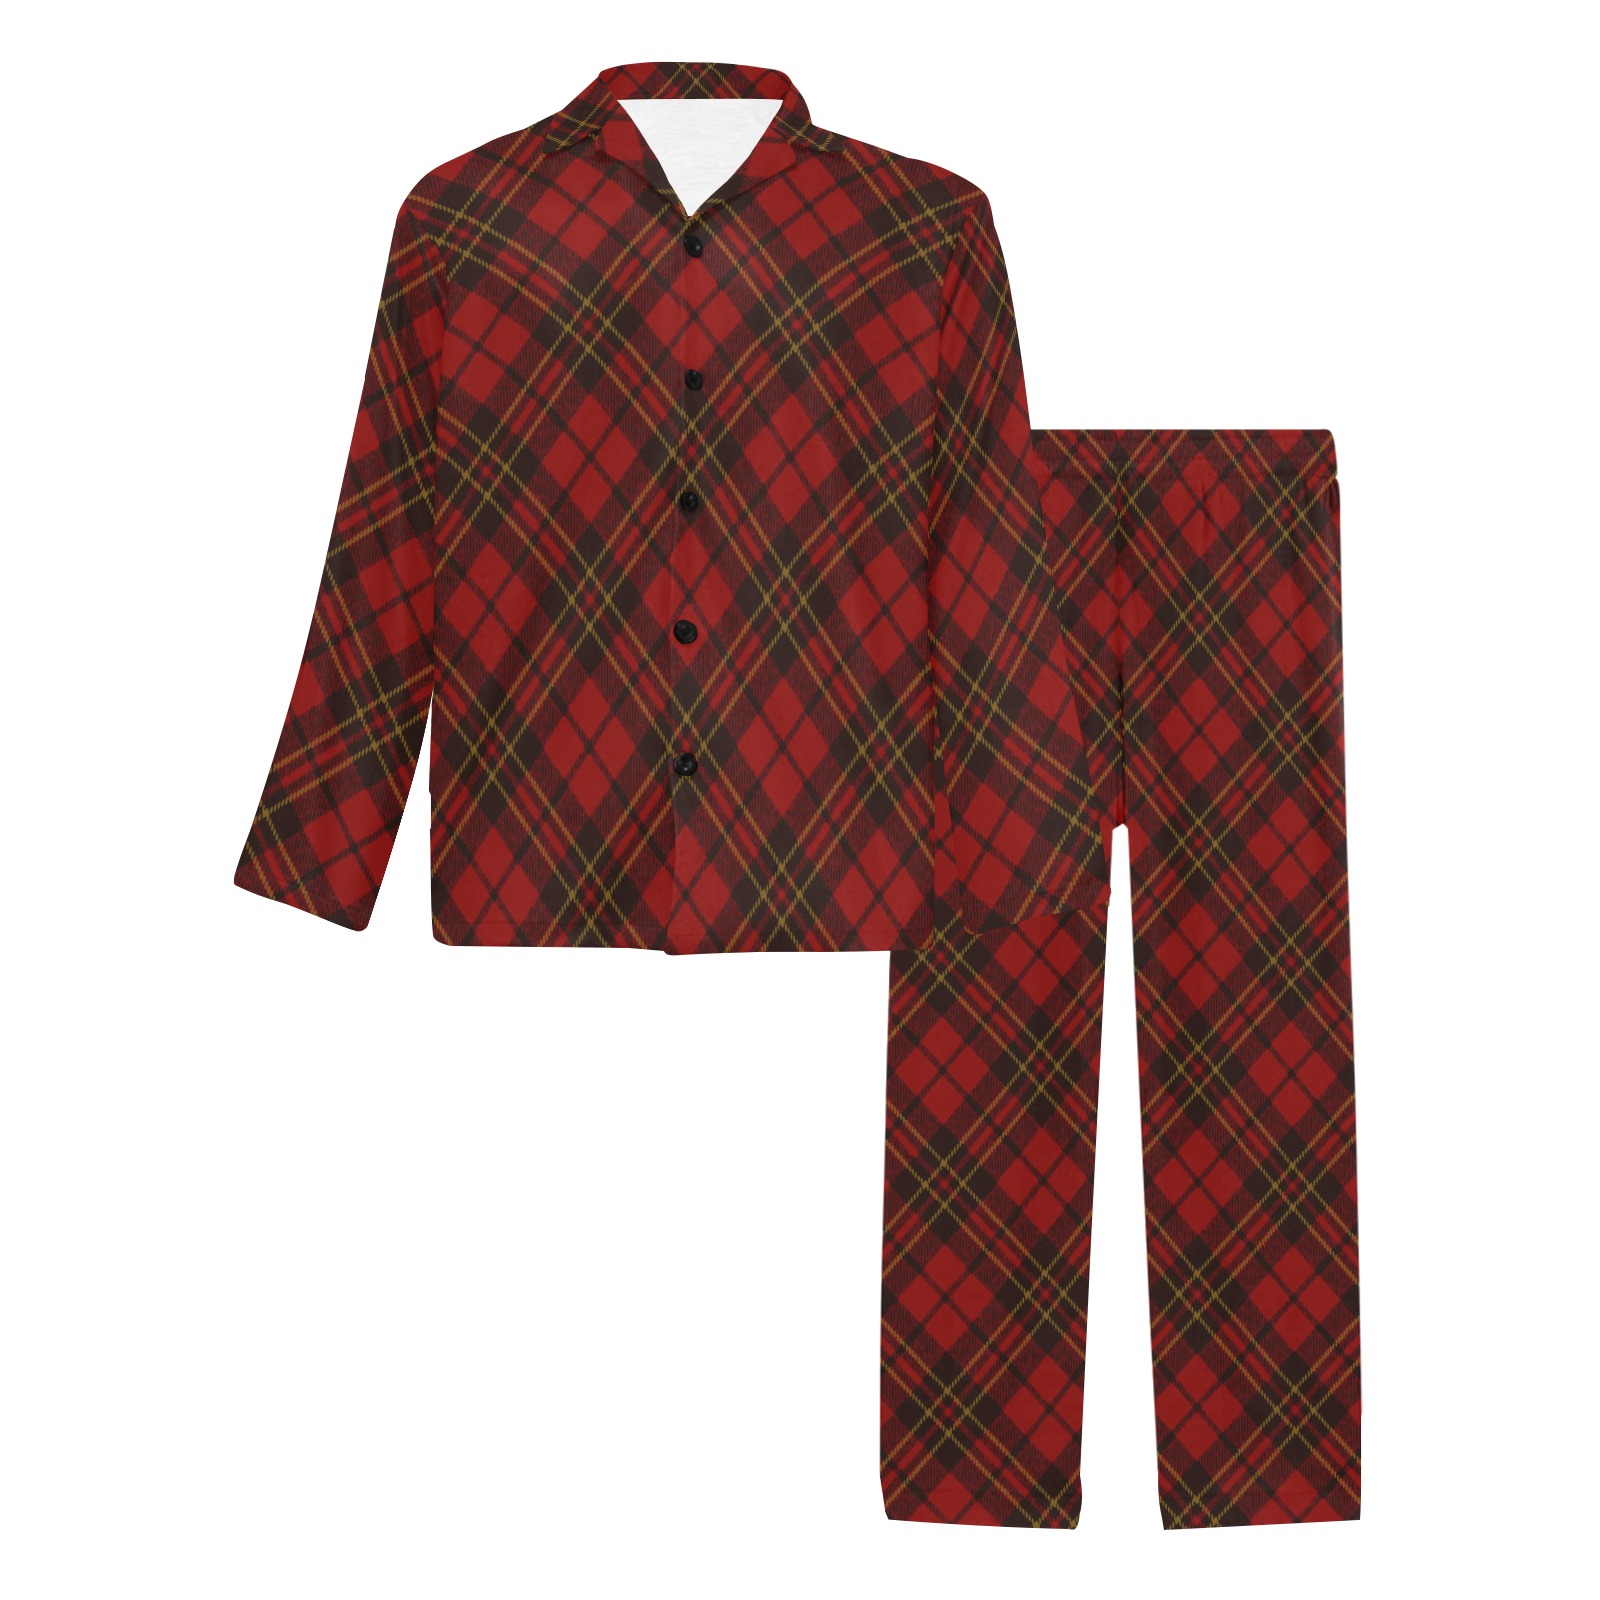 Red tartan plaid winter Christmas pattern holidays Men's V-Neck Long Pajama Set